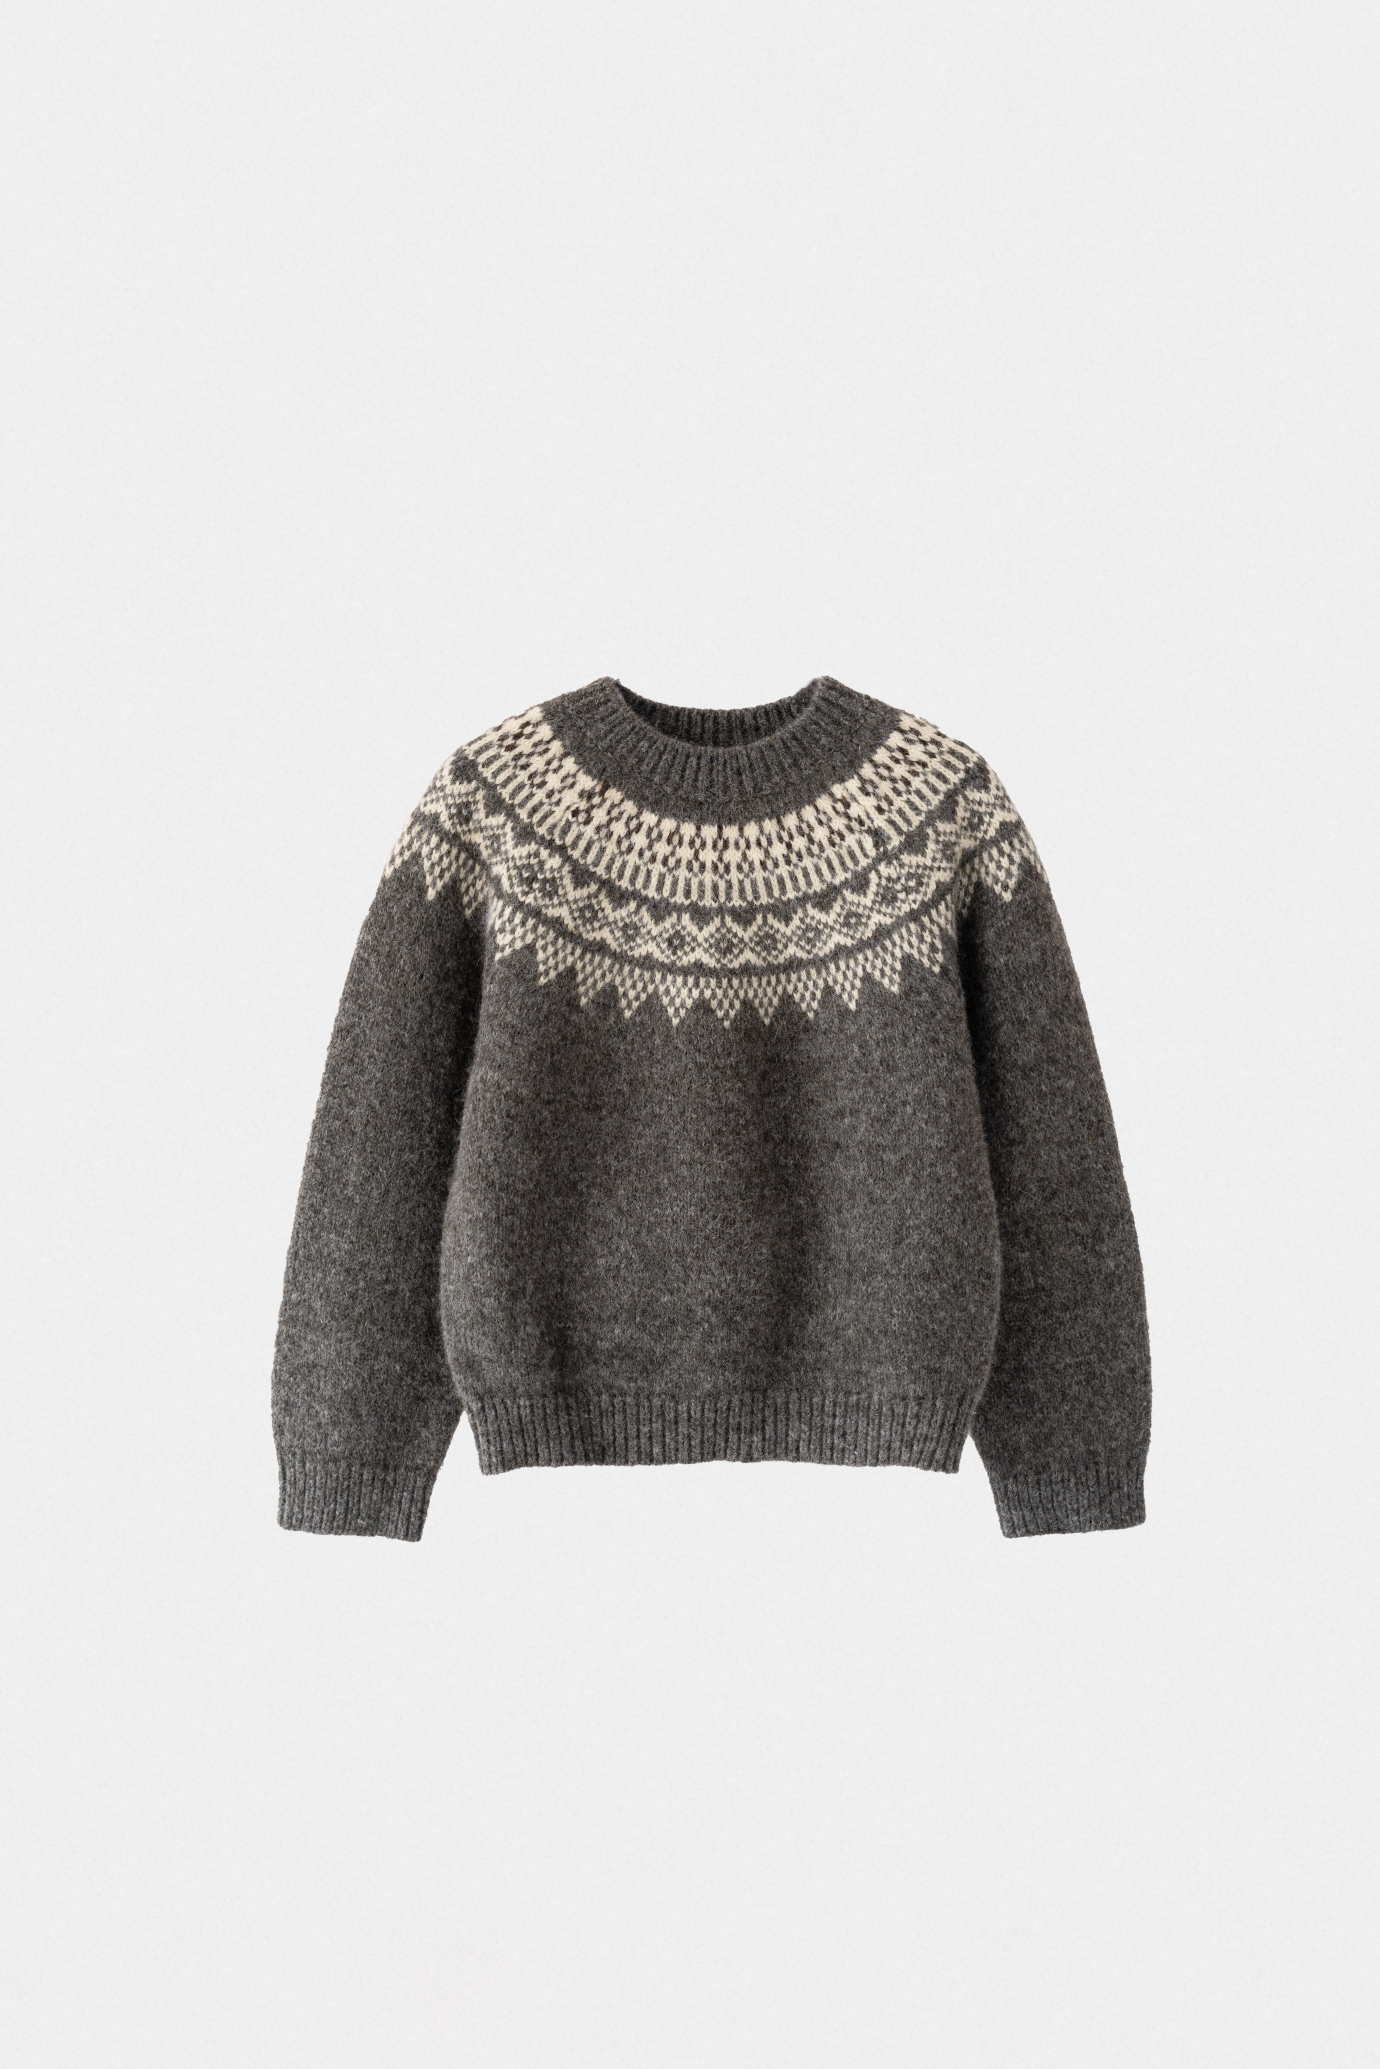 19151_Nordic Sweater [주문일로부터 20일이내 배송]